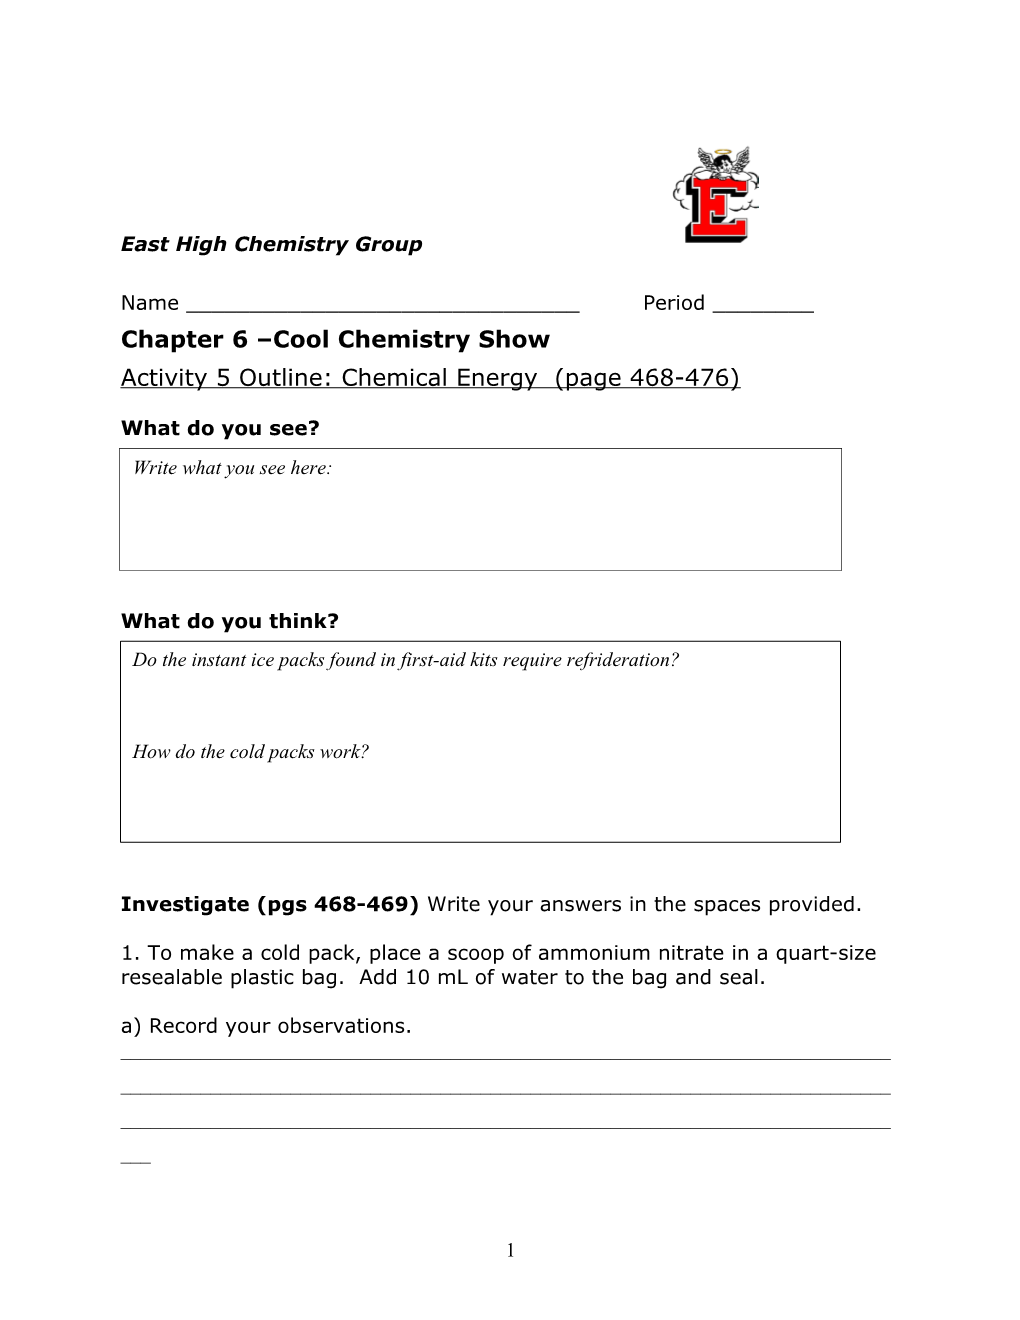 East High Chemistry Group